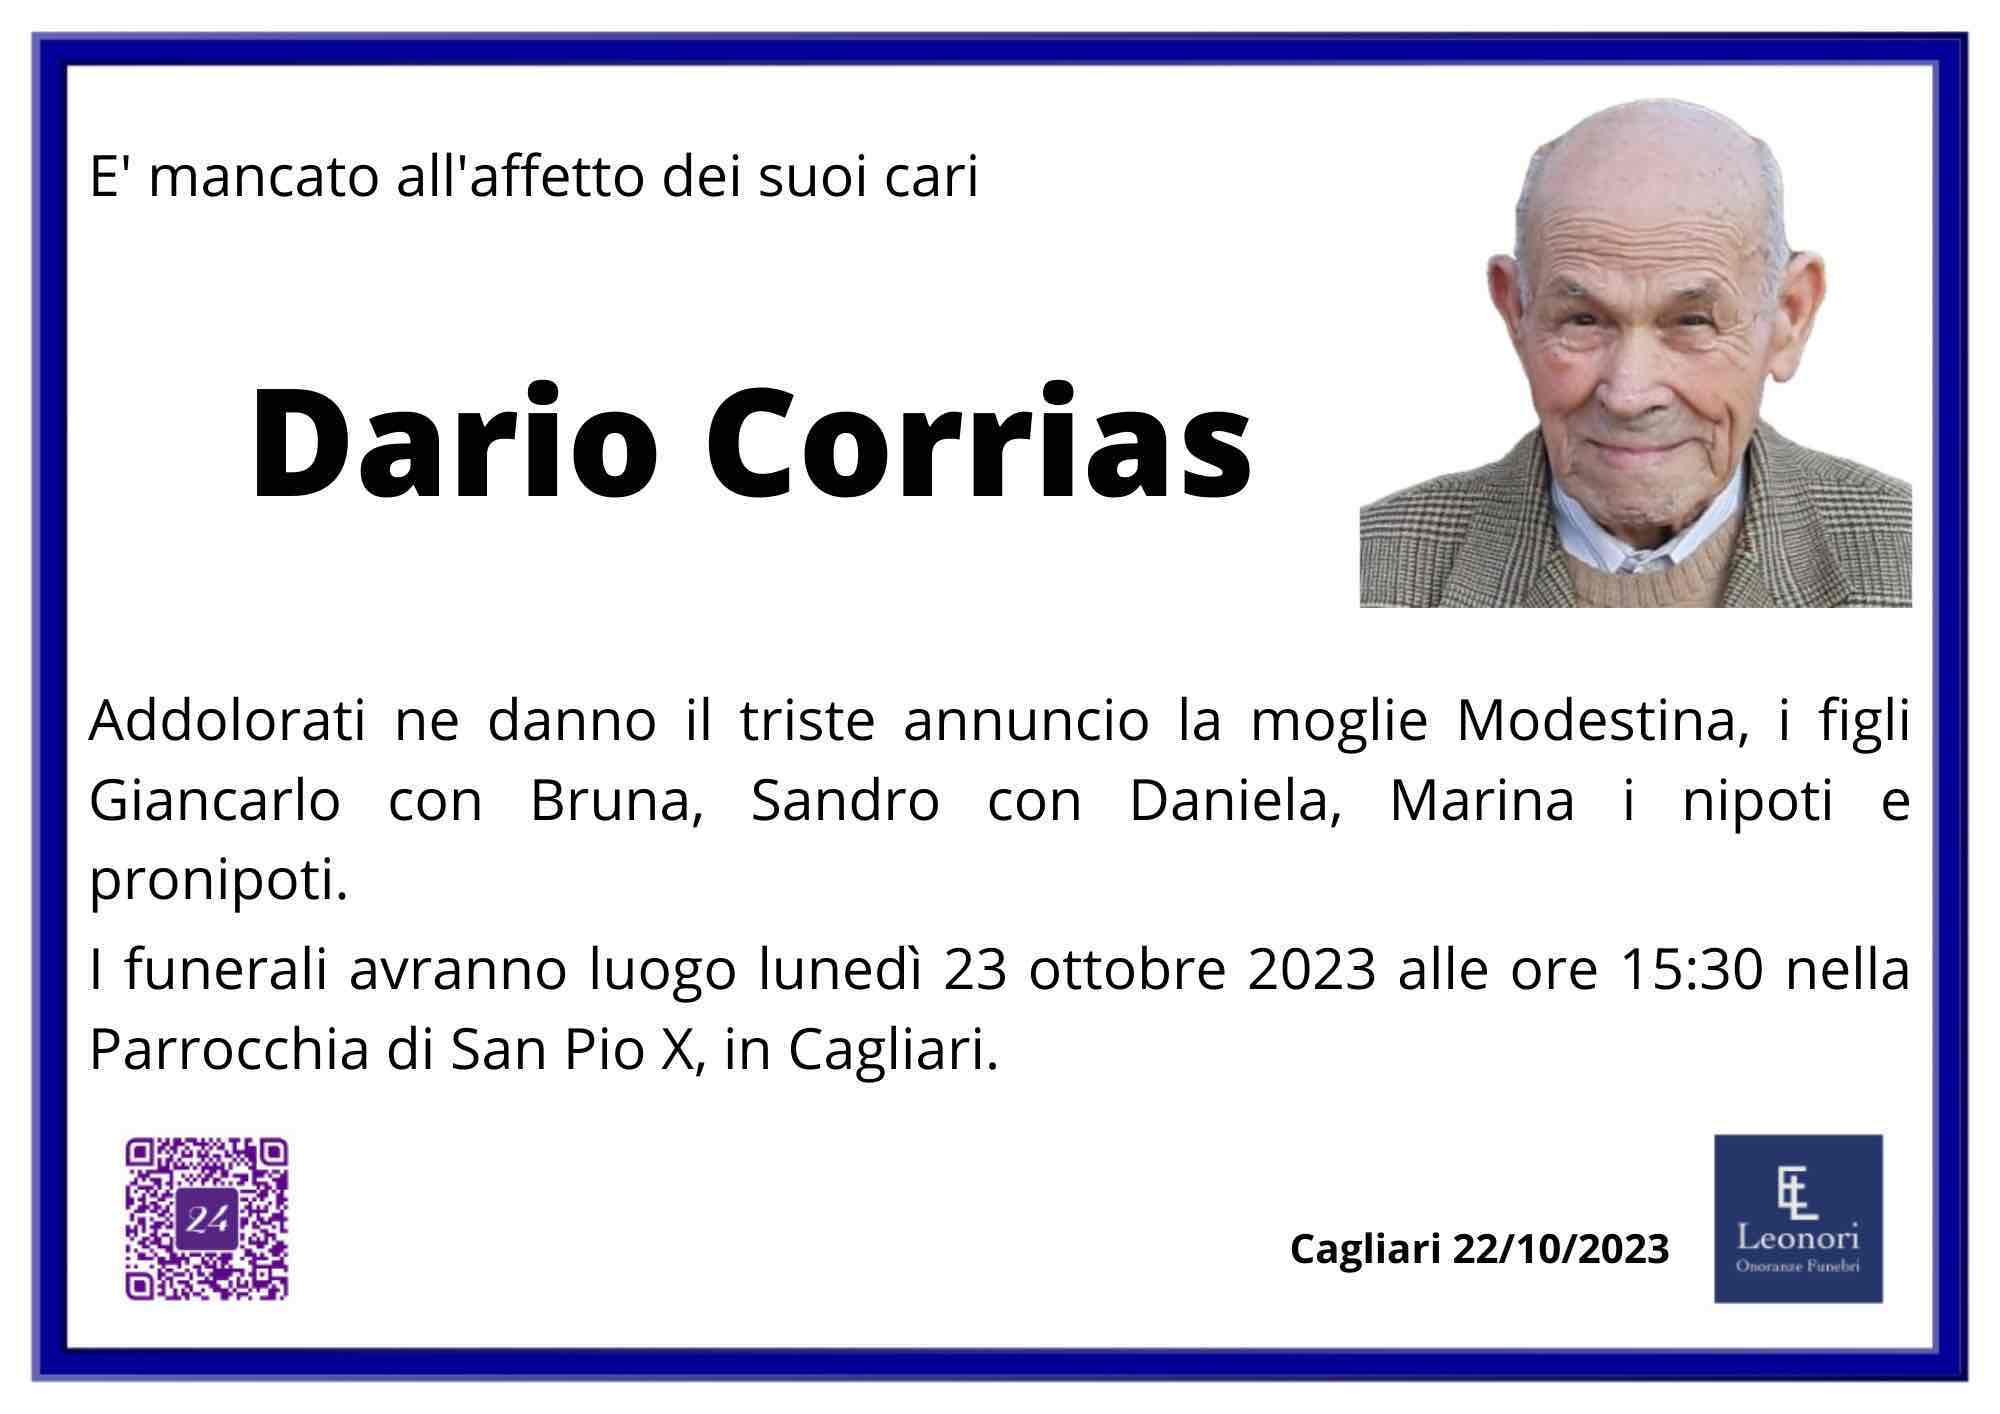 Dario Corrias